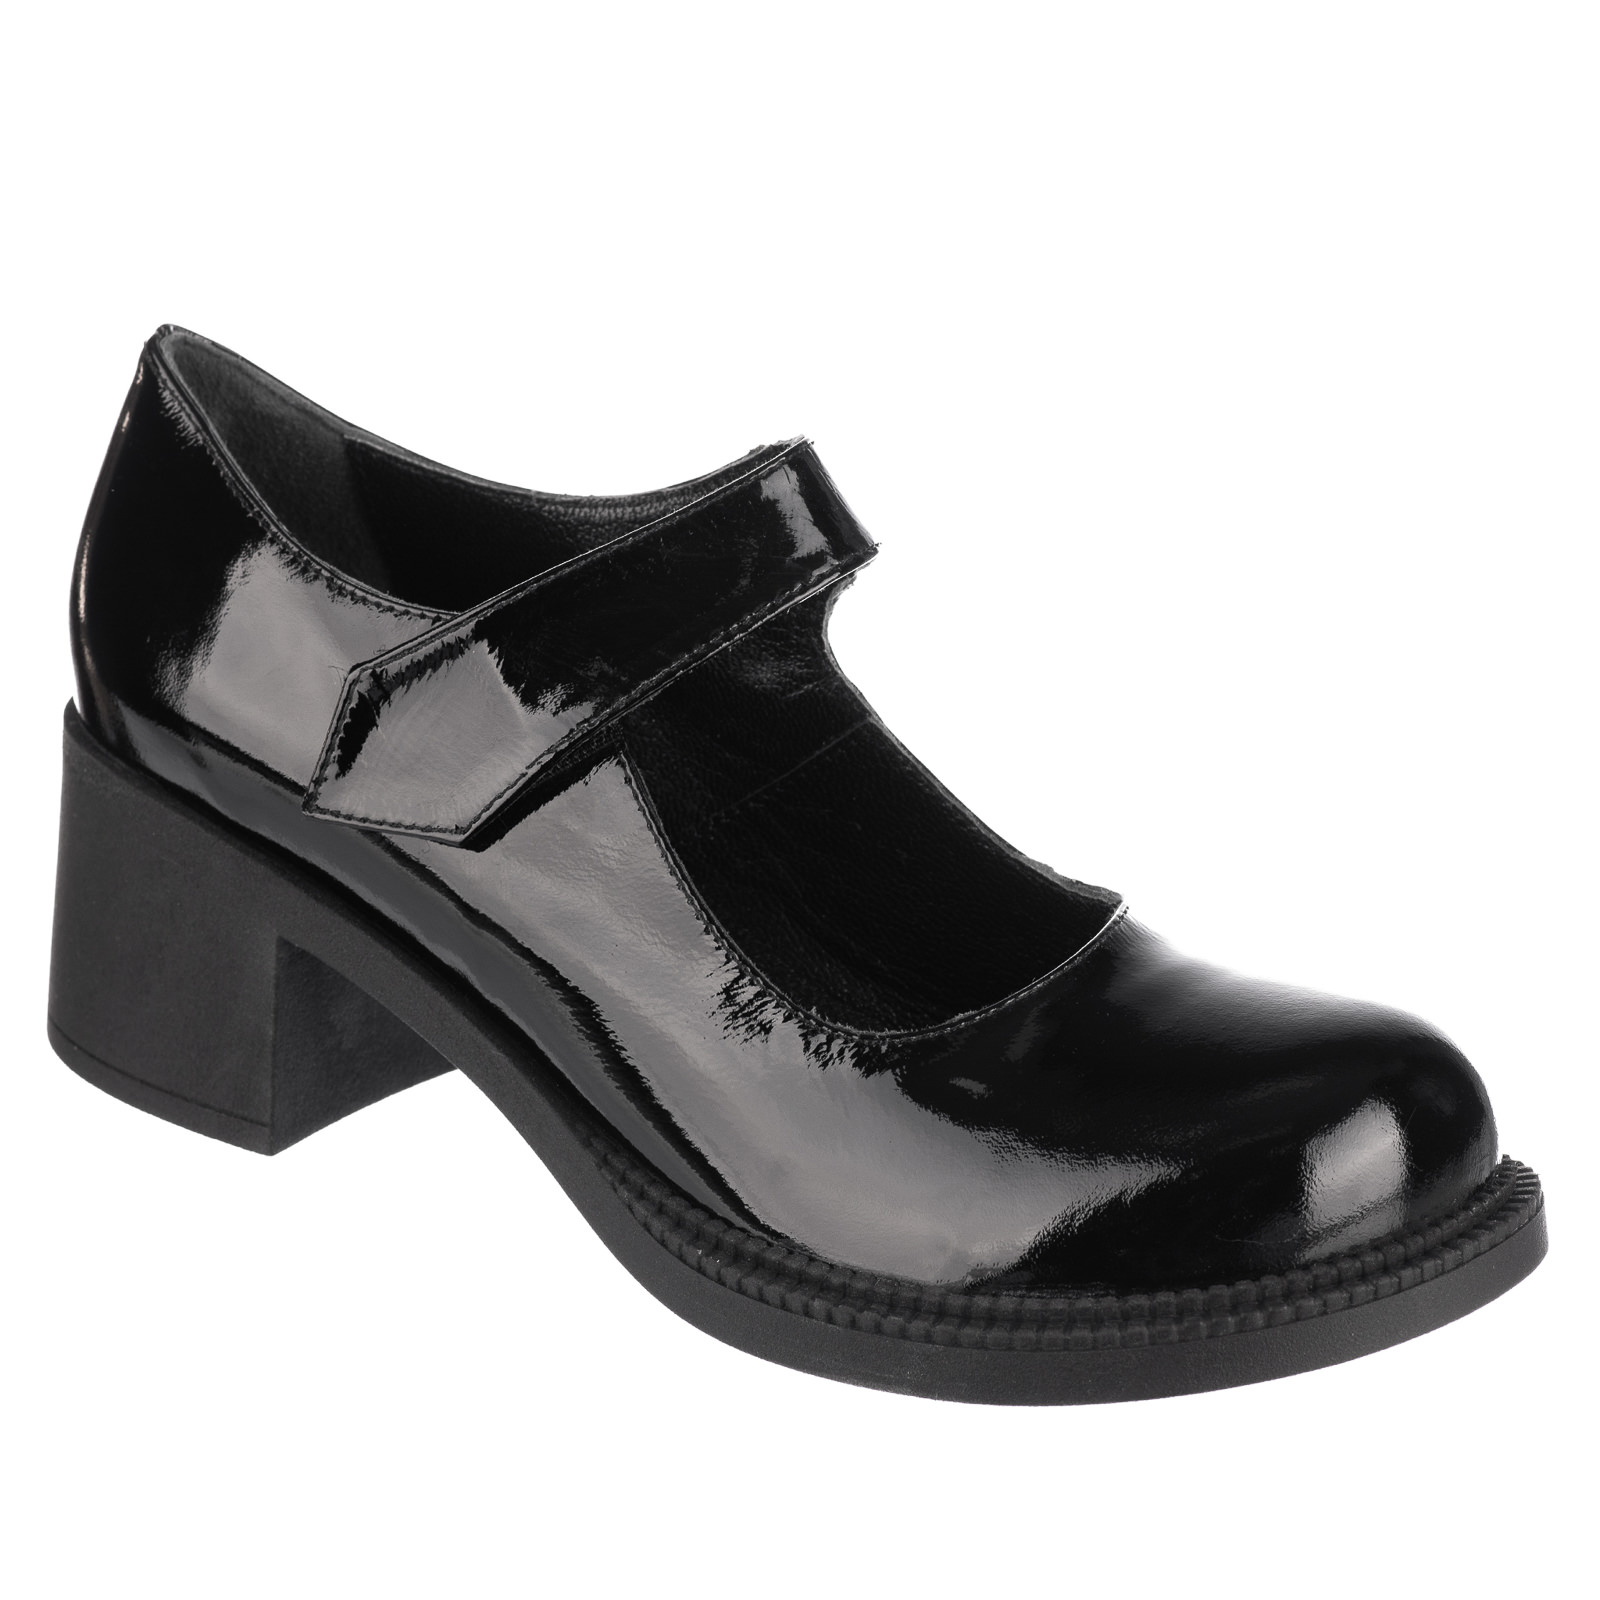 Leather shoes & flats B663 - BLACK